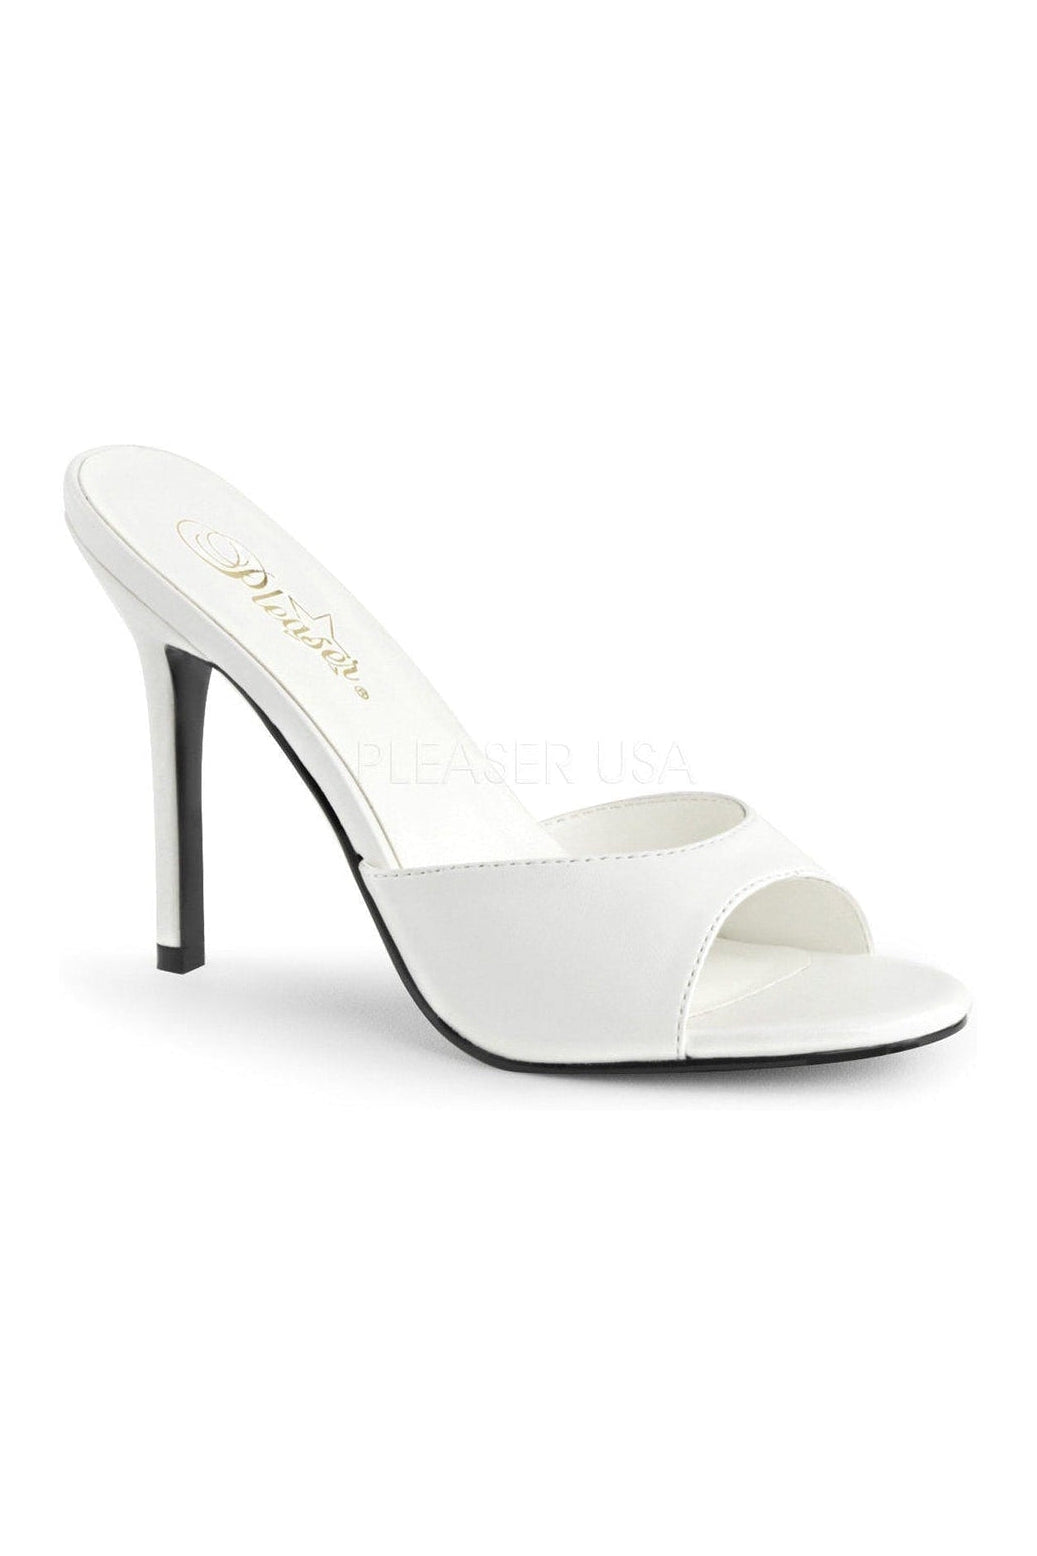 CLASSIQUE-01 Slide | White Faux Leather-Pleaser-White-Slides-SEXYSHOES.COM